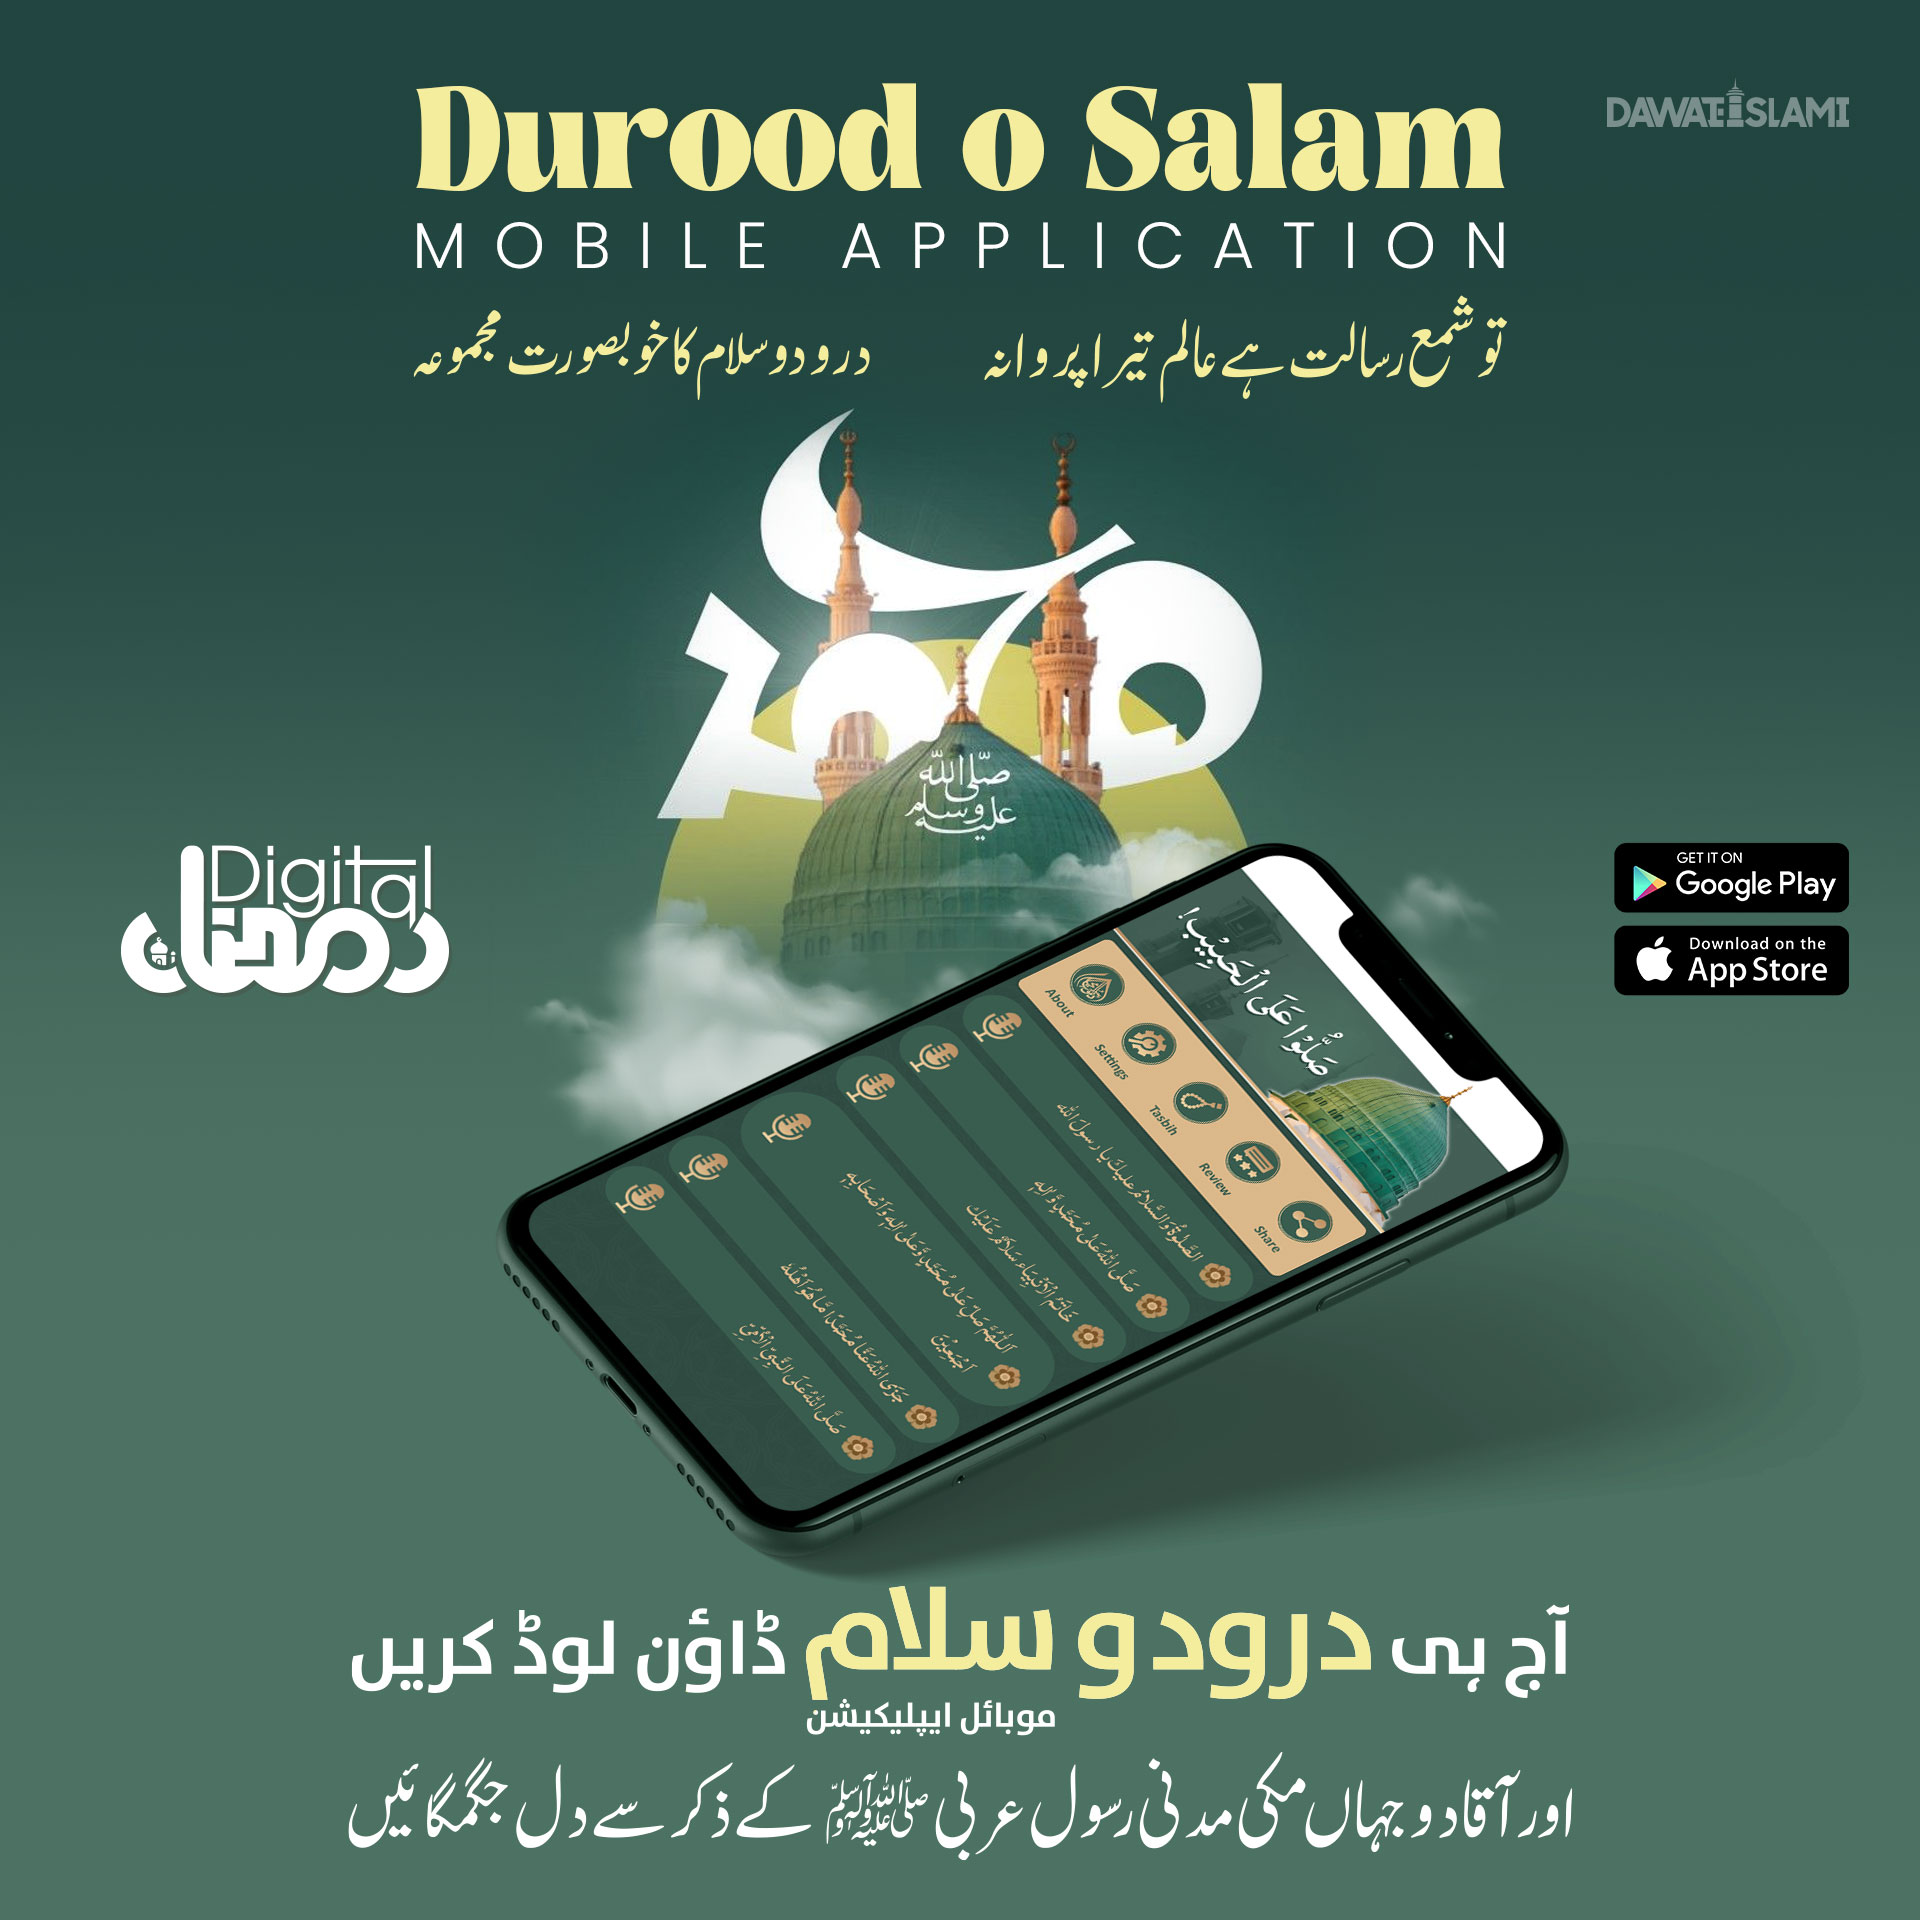 Durood o Salam Mobile Application 